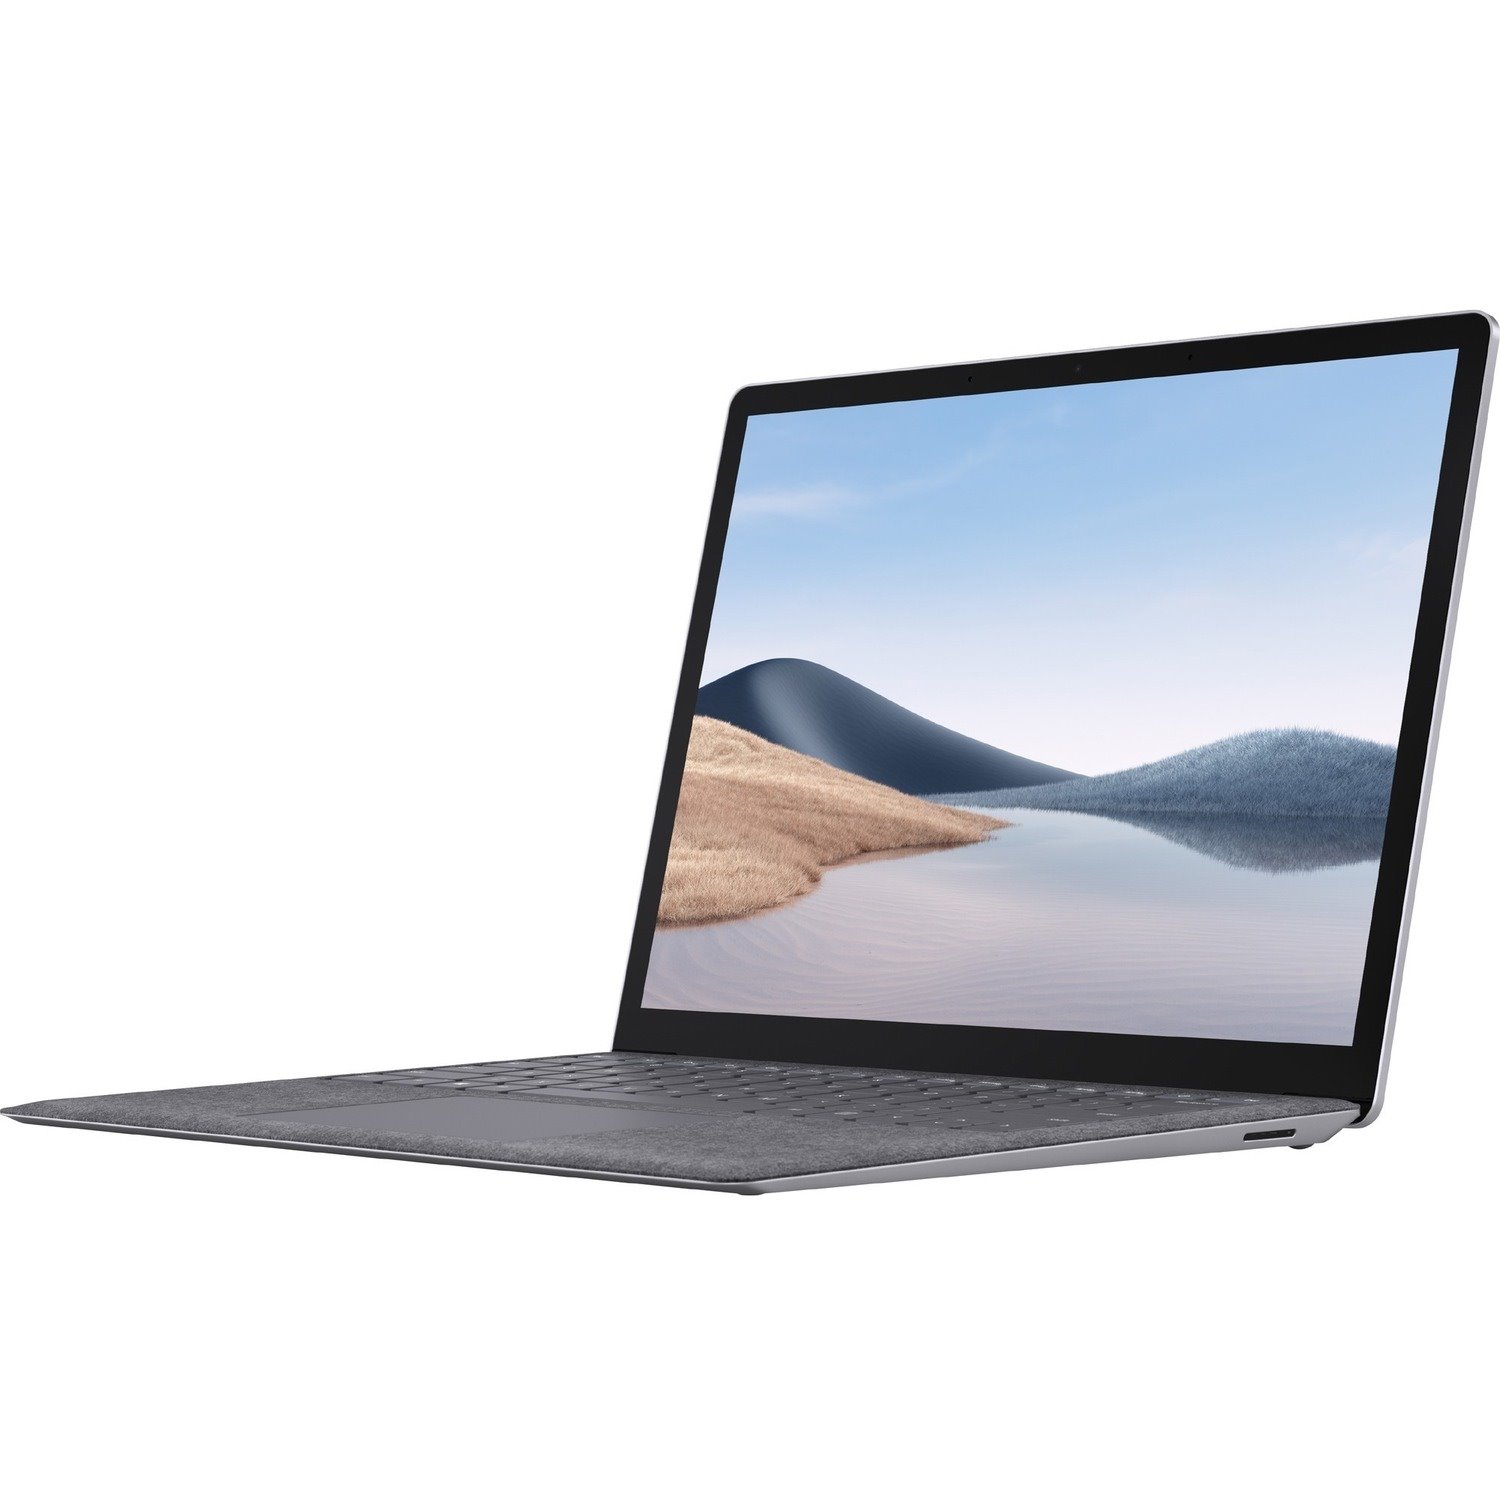 Microsoft Surface Laptop 4 34.3 cm (13.5") Touchscreen Notebook - 2256 x 1504 - Intel Core i5 - 8 GB Total RAM - 256 GB SSD - Platinum